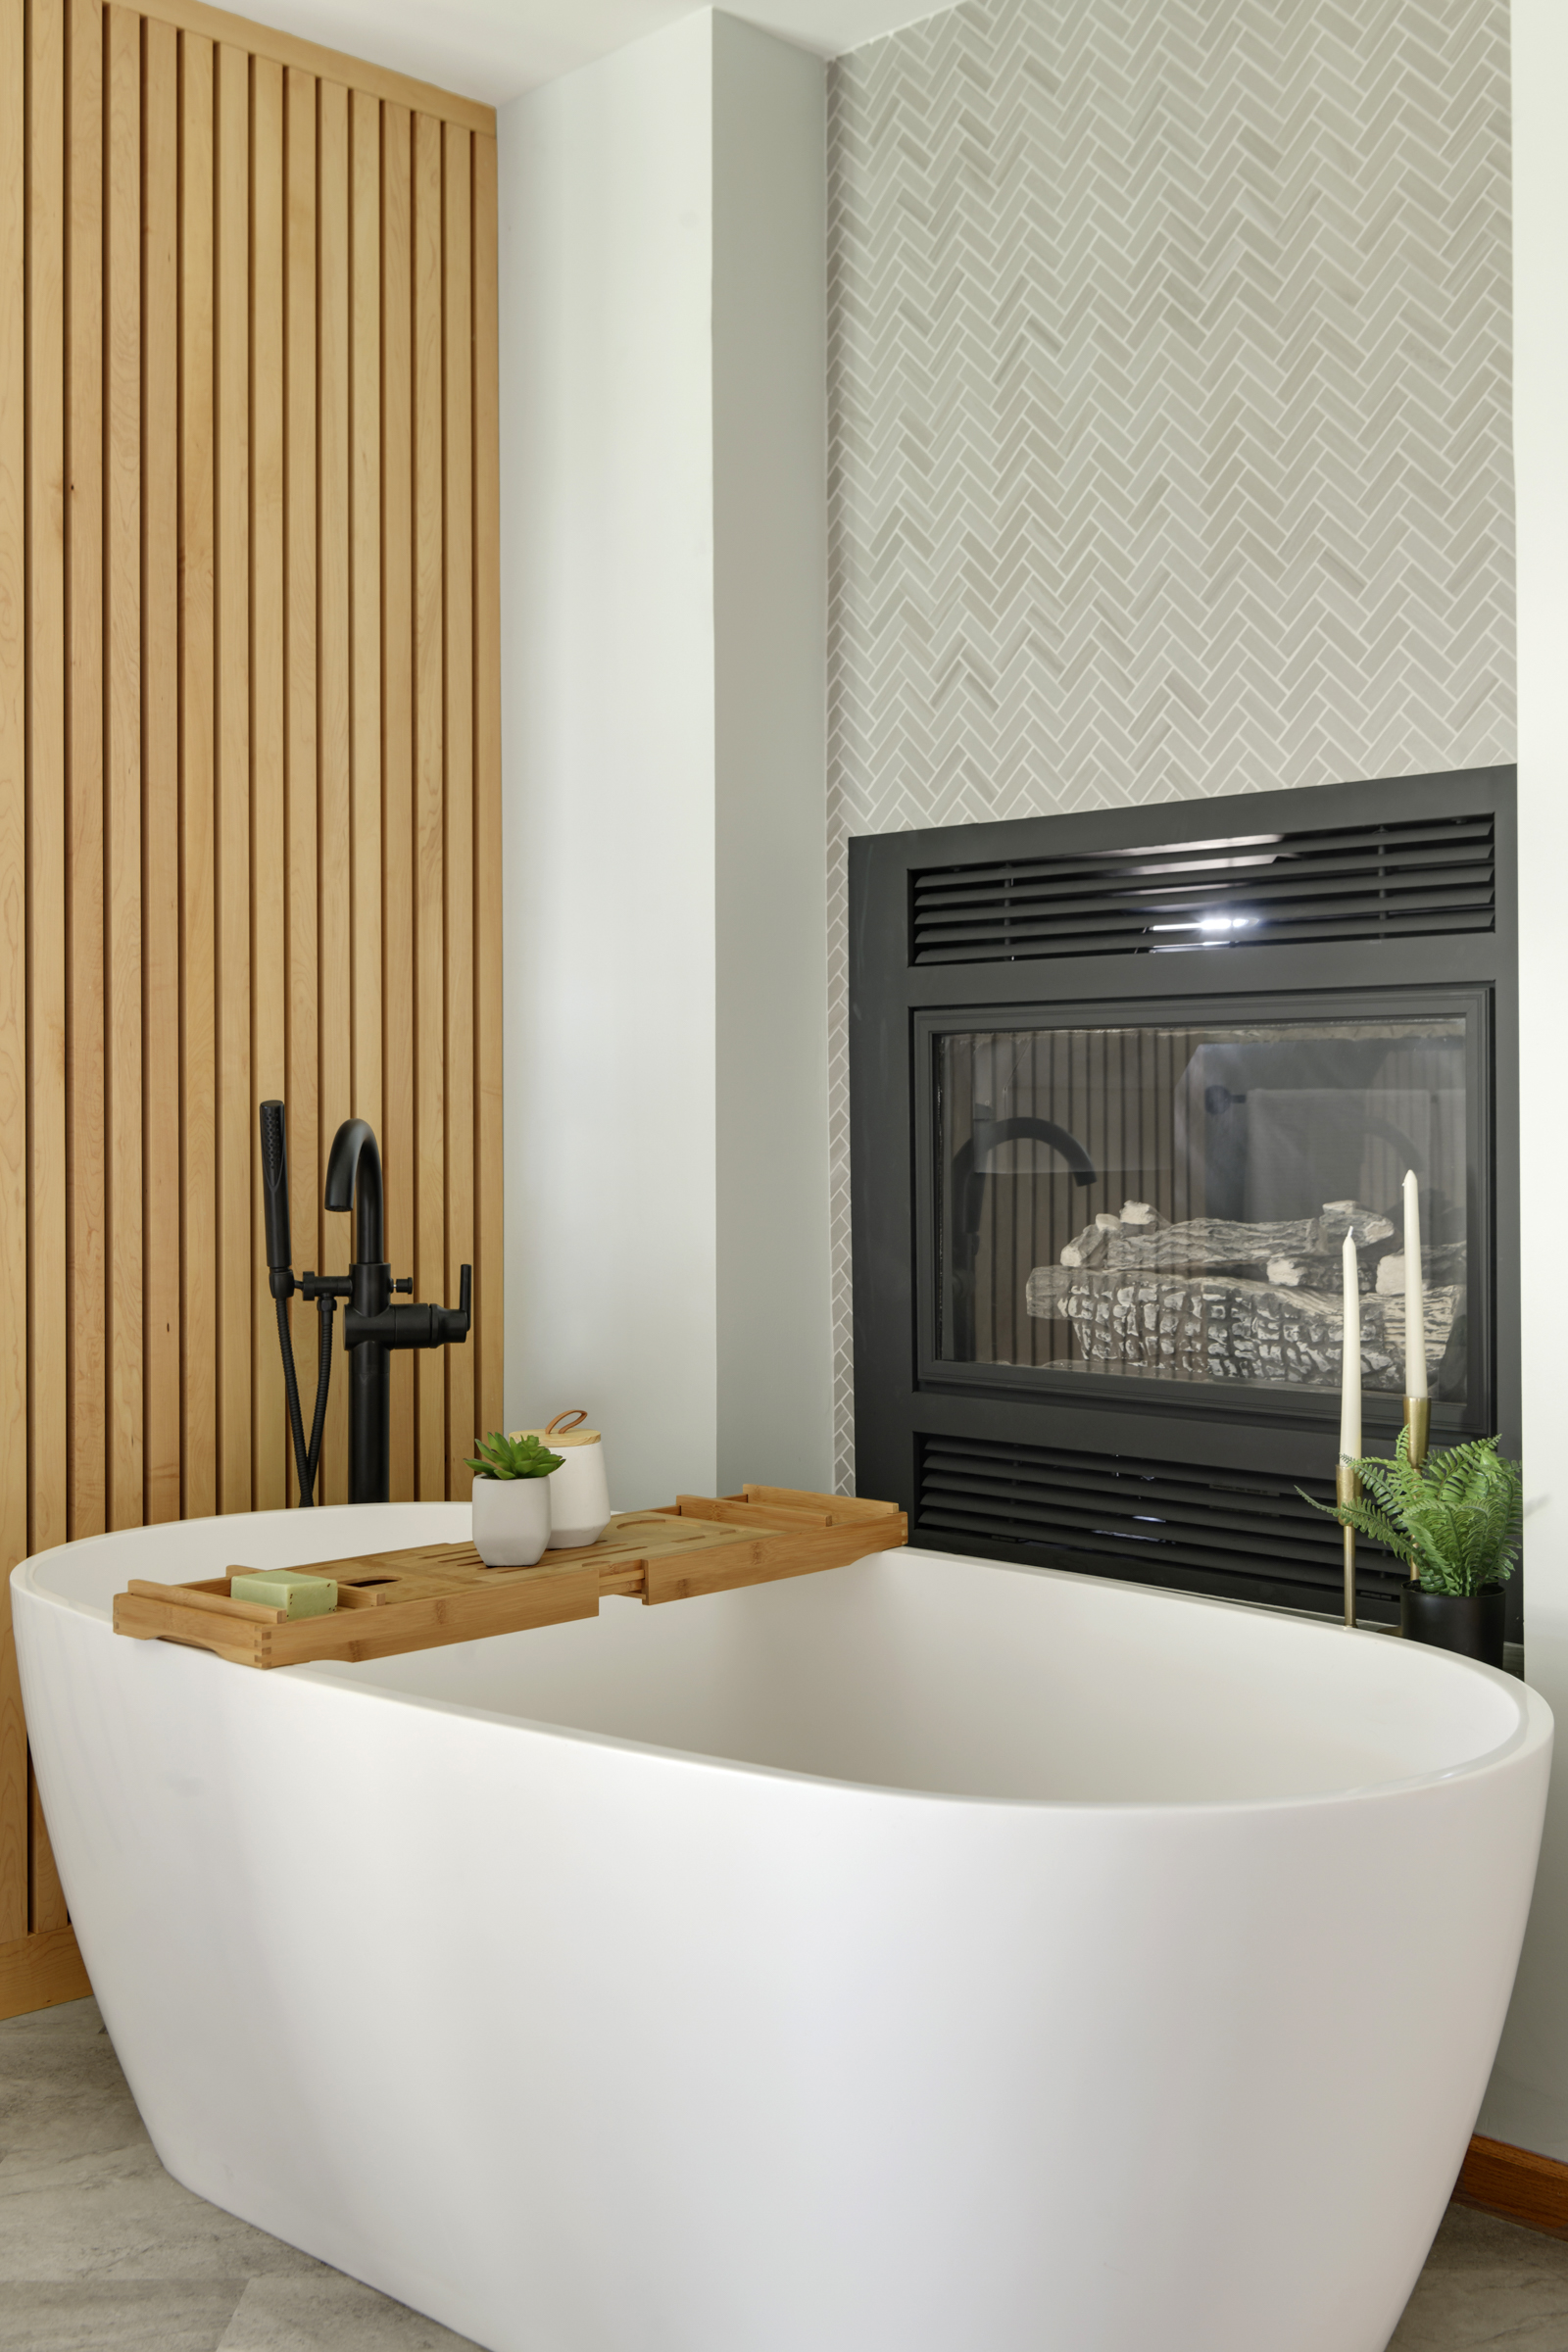 Mahtomedi MN Bathroom Remodel by White Birch Design LLC